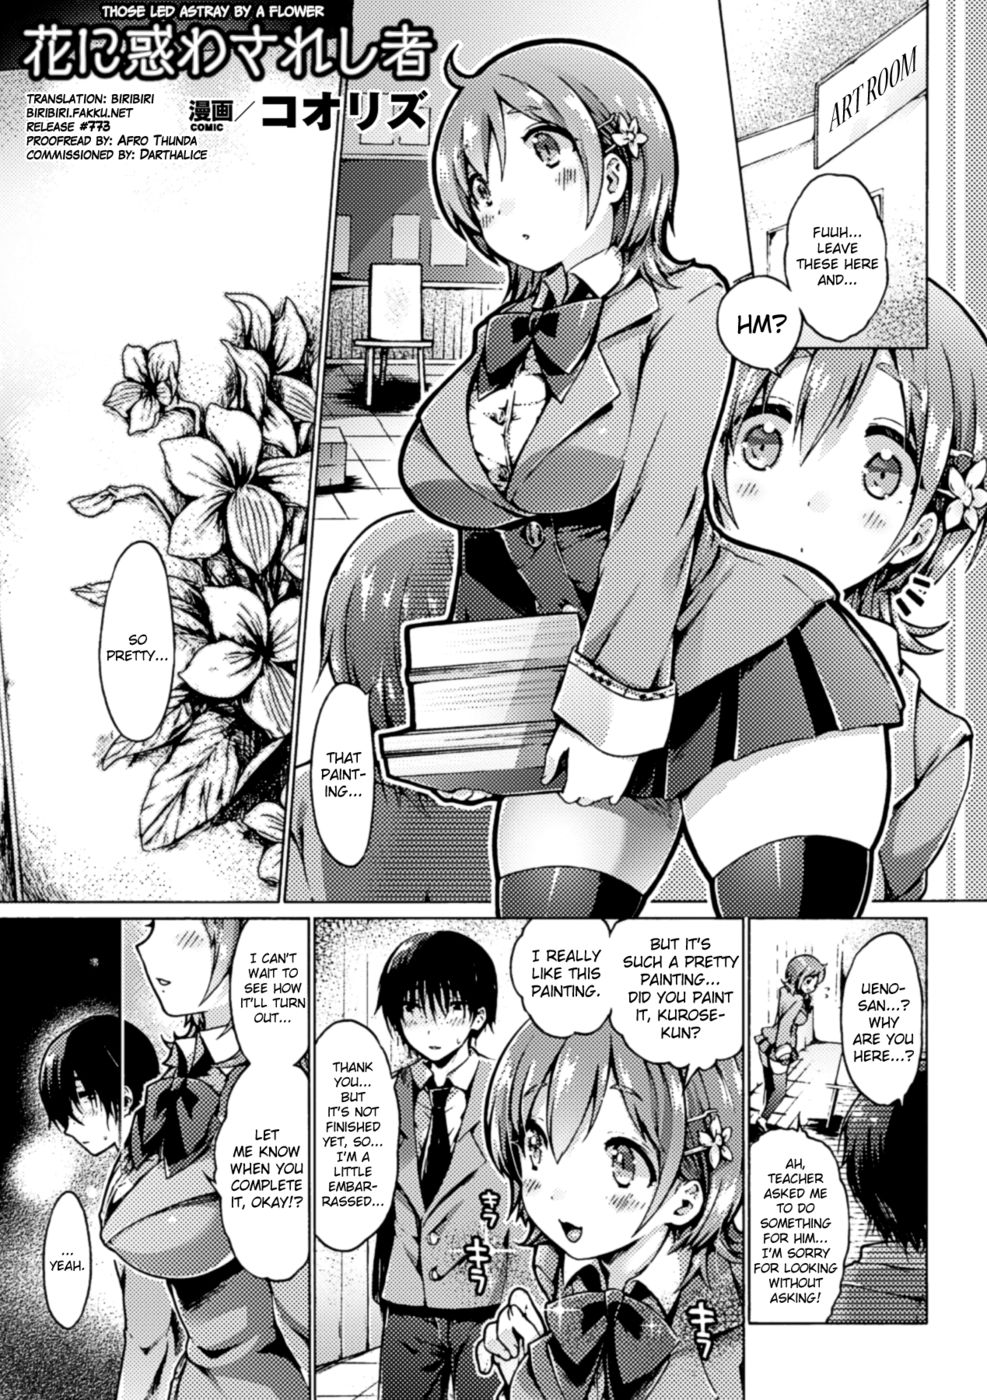 Hentai Manga Comic-Those Led Astray by a Flower-Read-1